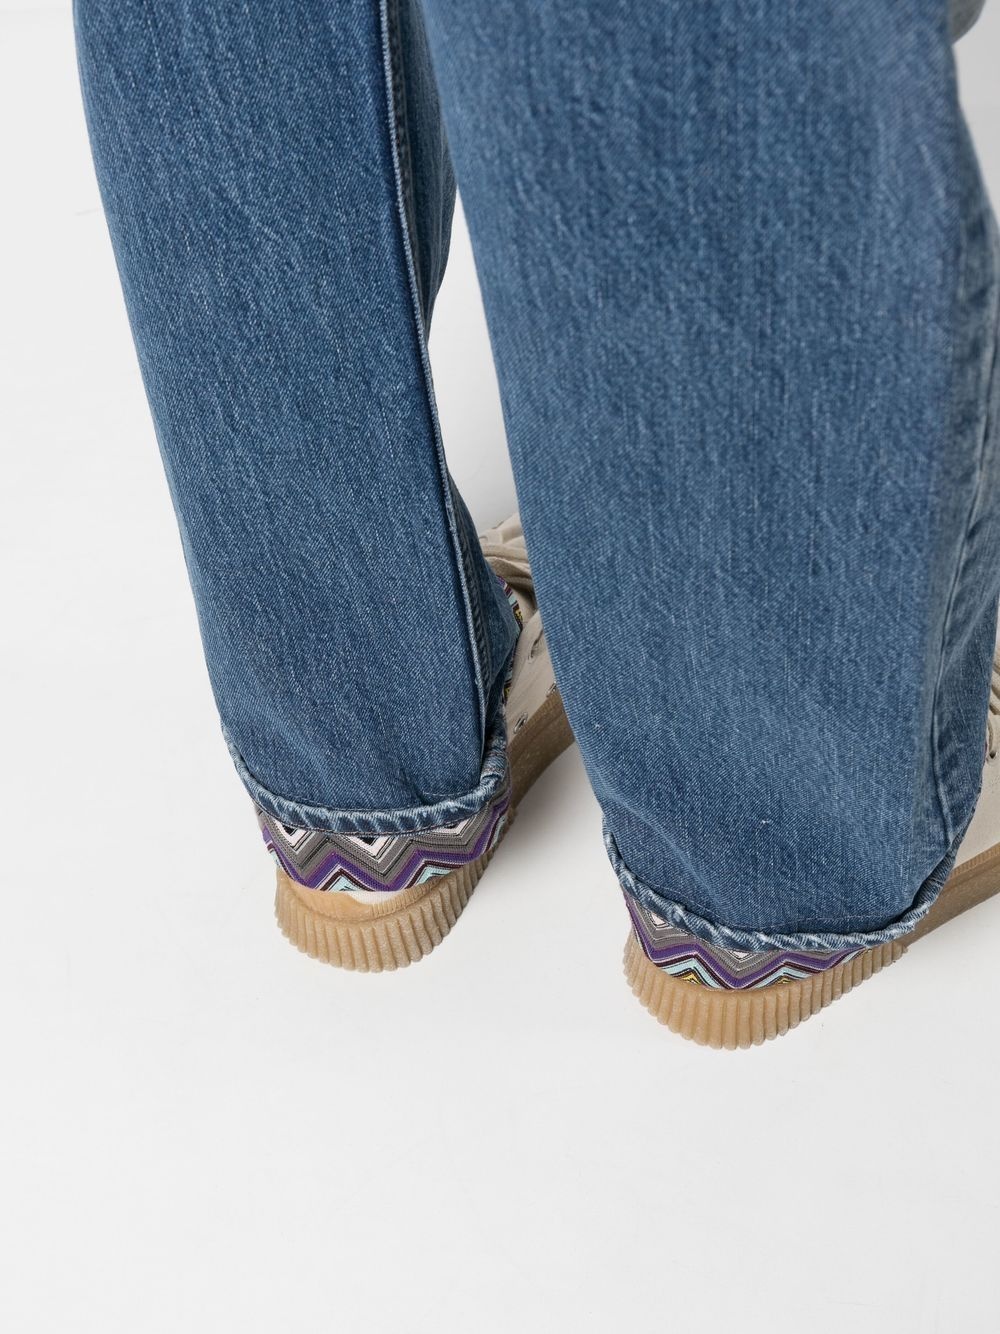 stonewashed denim jeans - 5